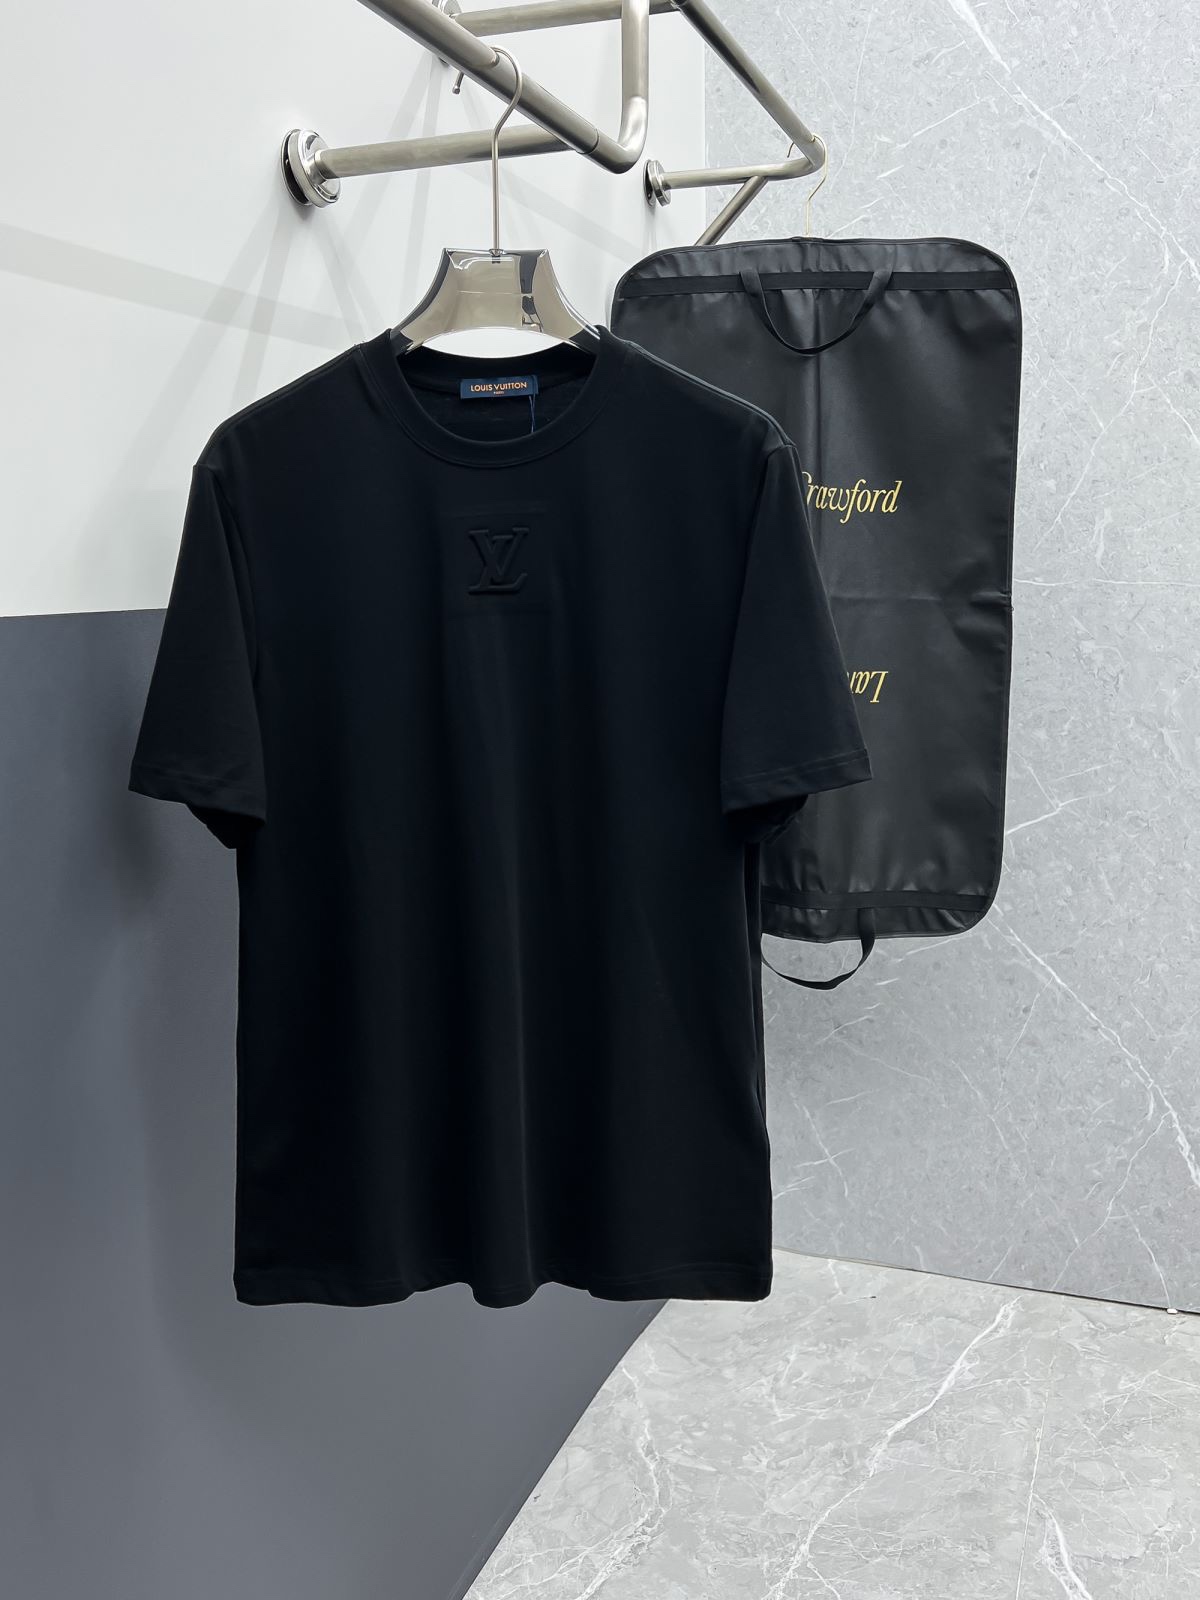 Louis Vuitton Clothing T-Shirt Cotton Fashion Short Sleeve